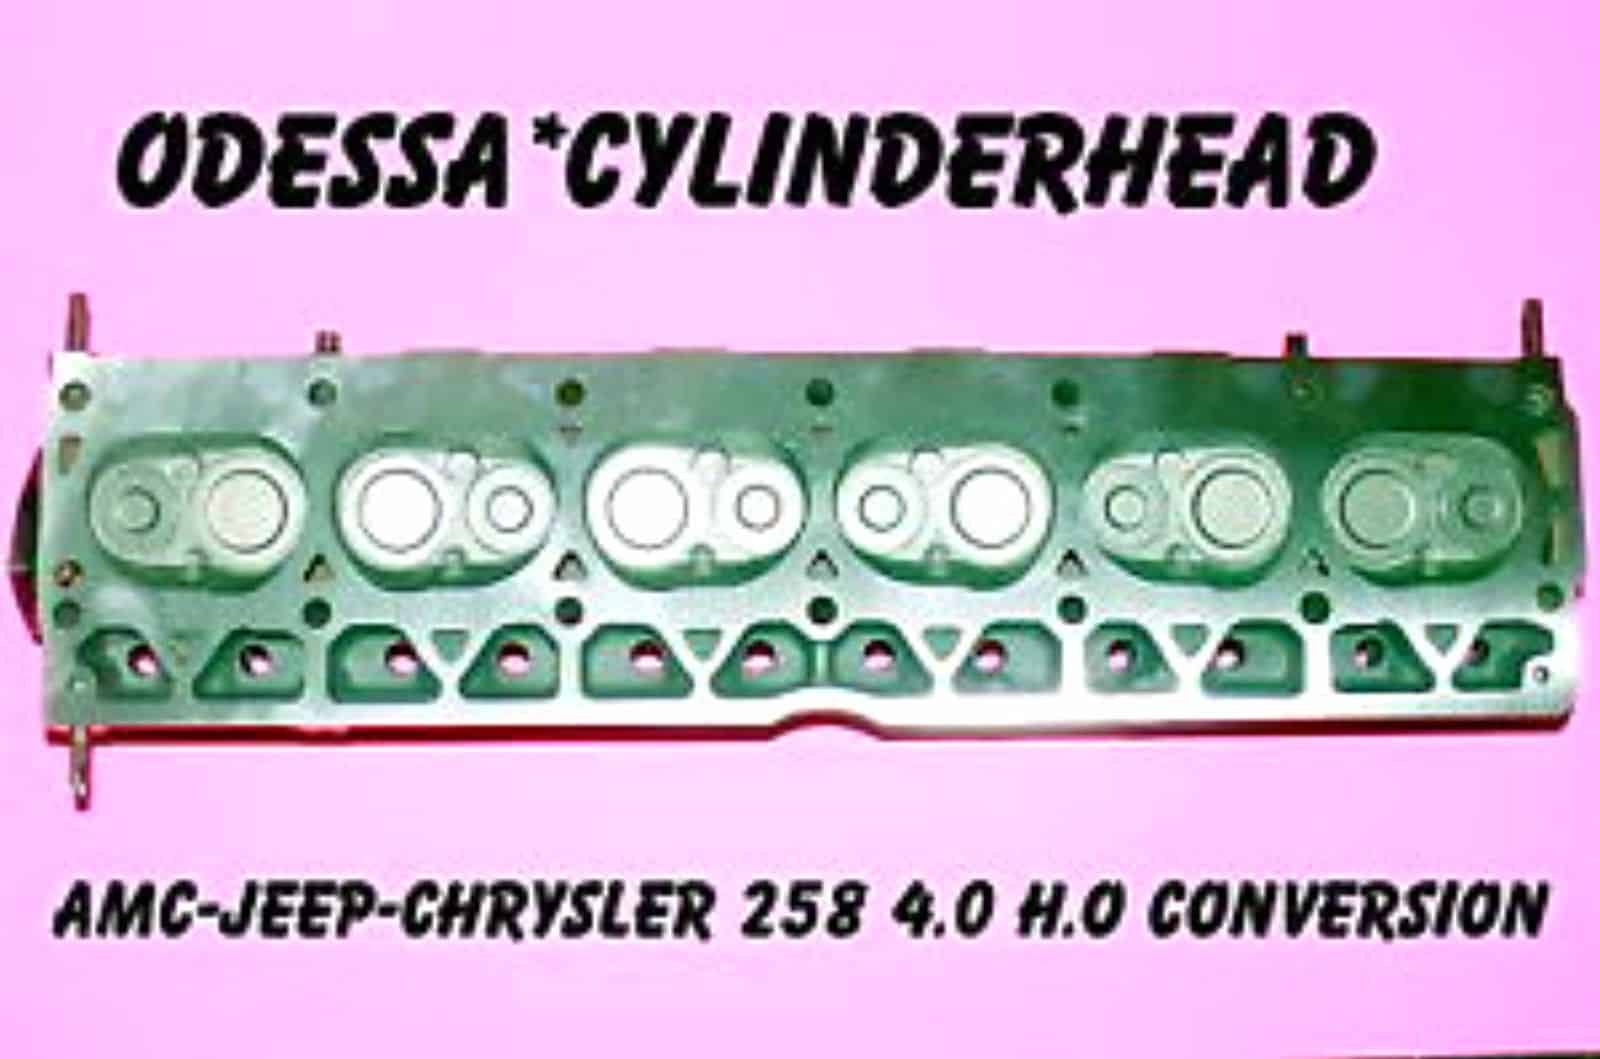 AMC JEEP CHRYSLER 258 4.0 H.O CONVERSION CYLINDER HEAD REBUILT